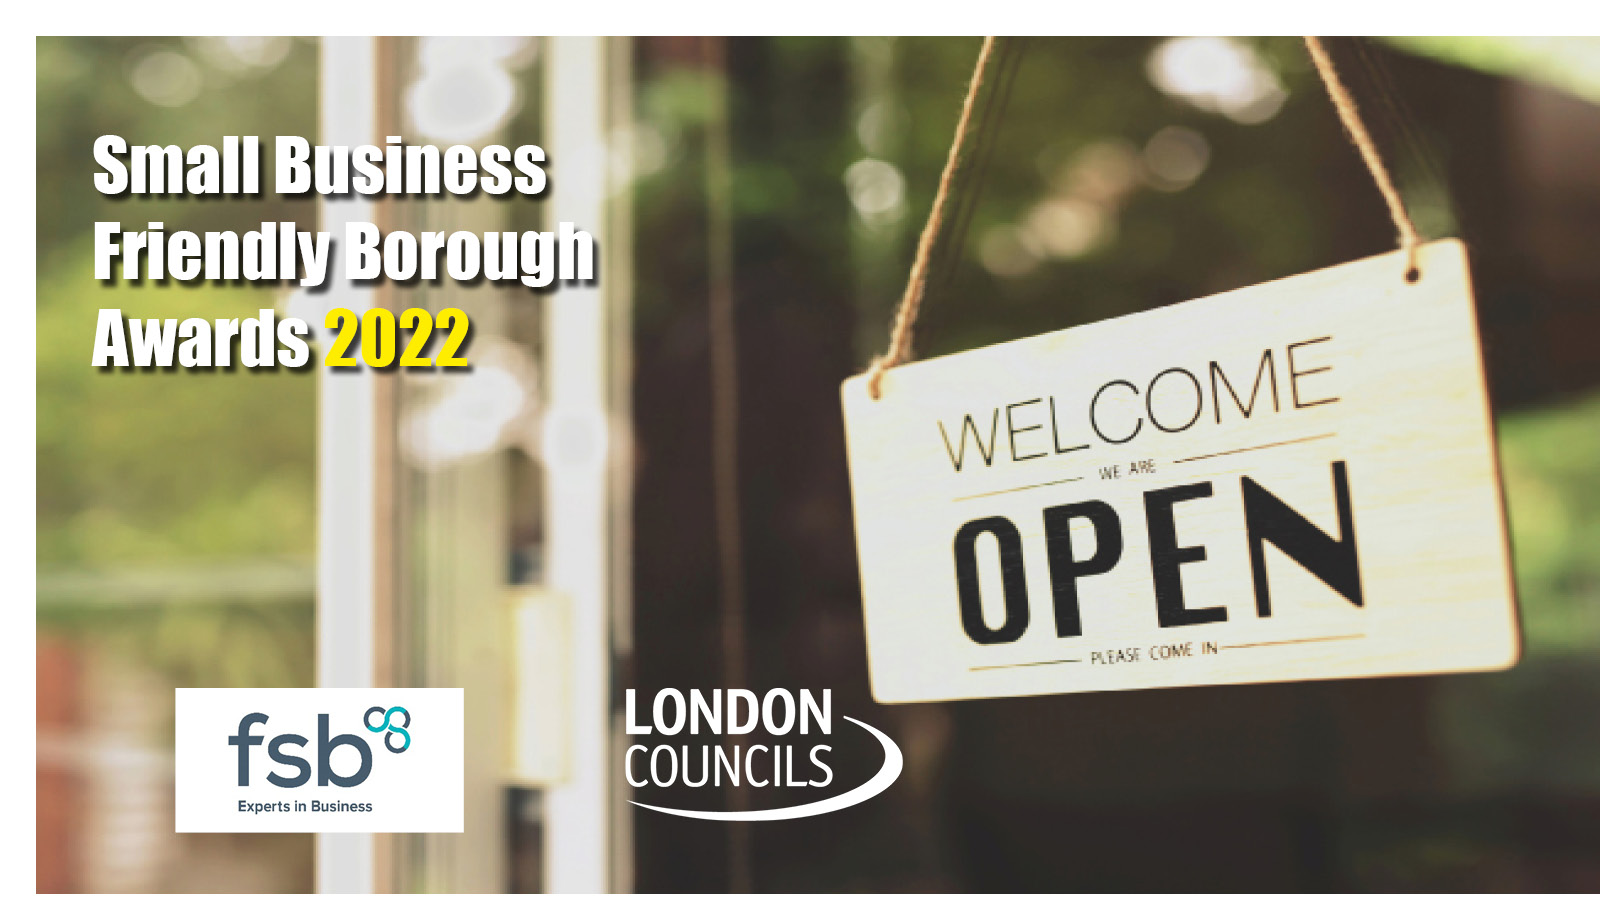 Small Business Friendly Borough Awards 2022